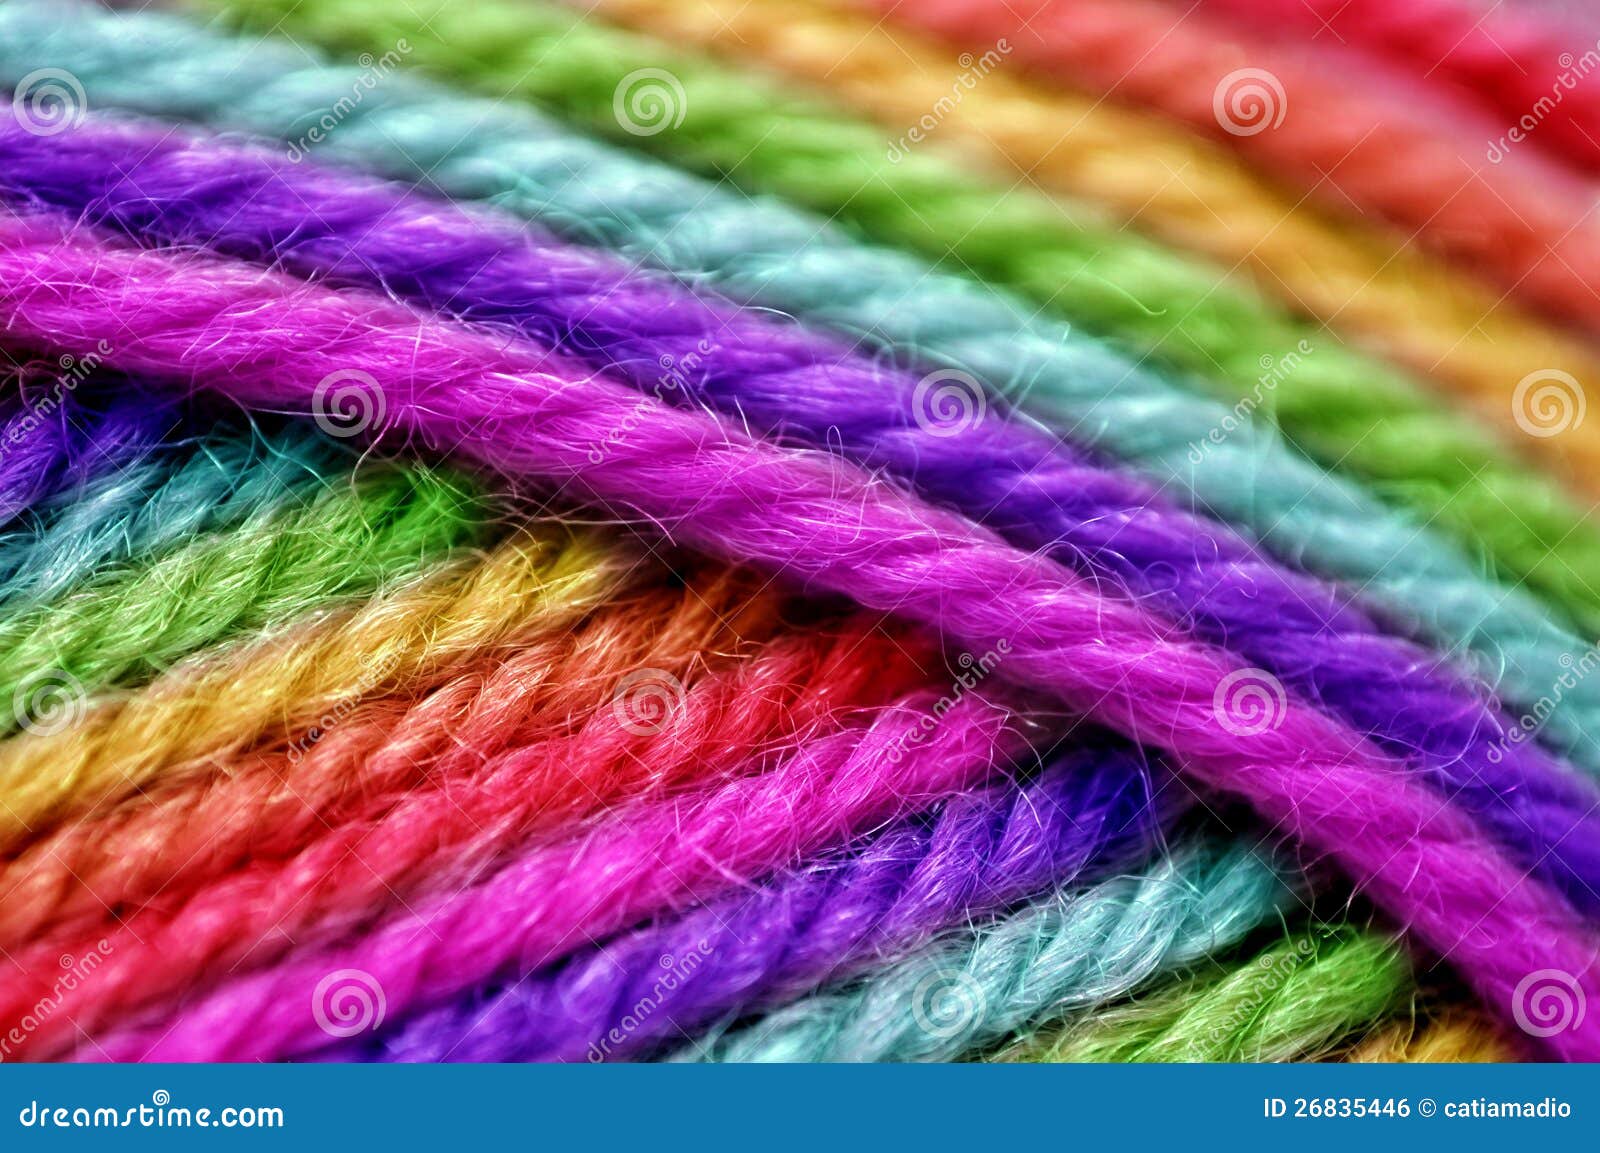 rainbow wool